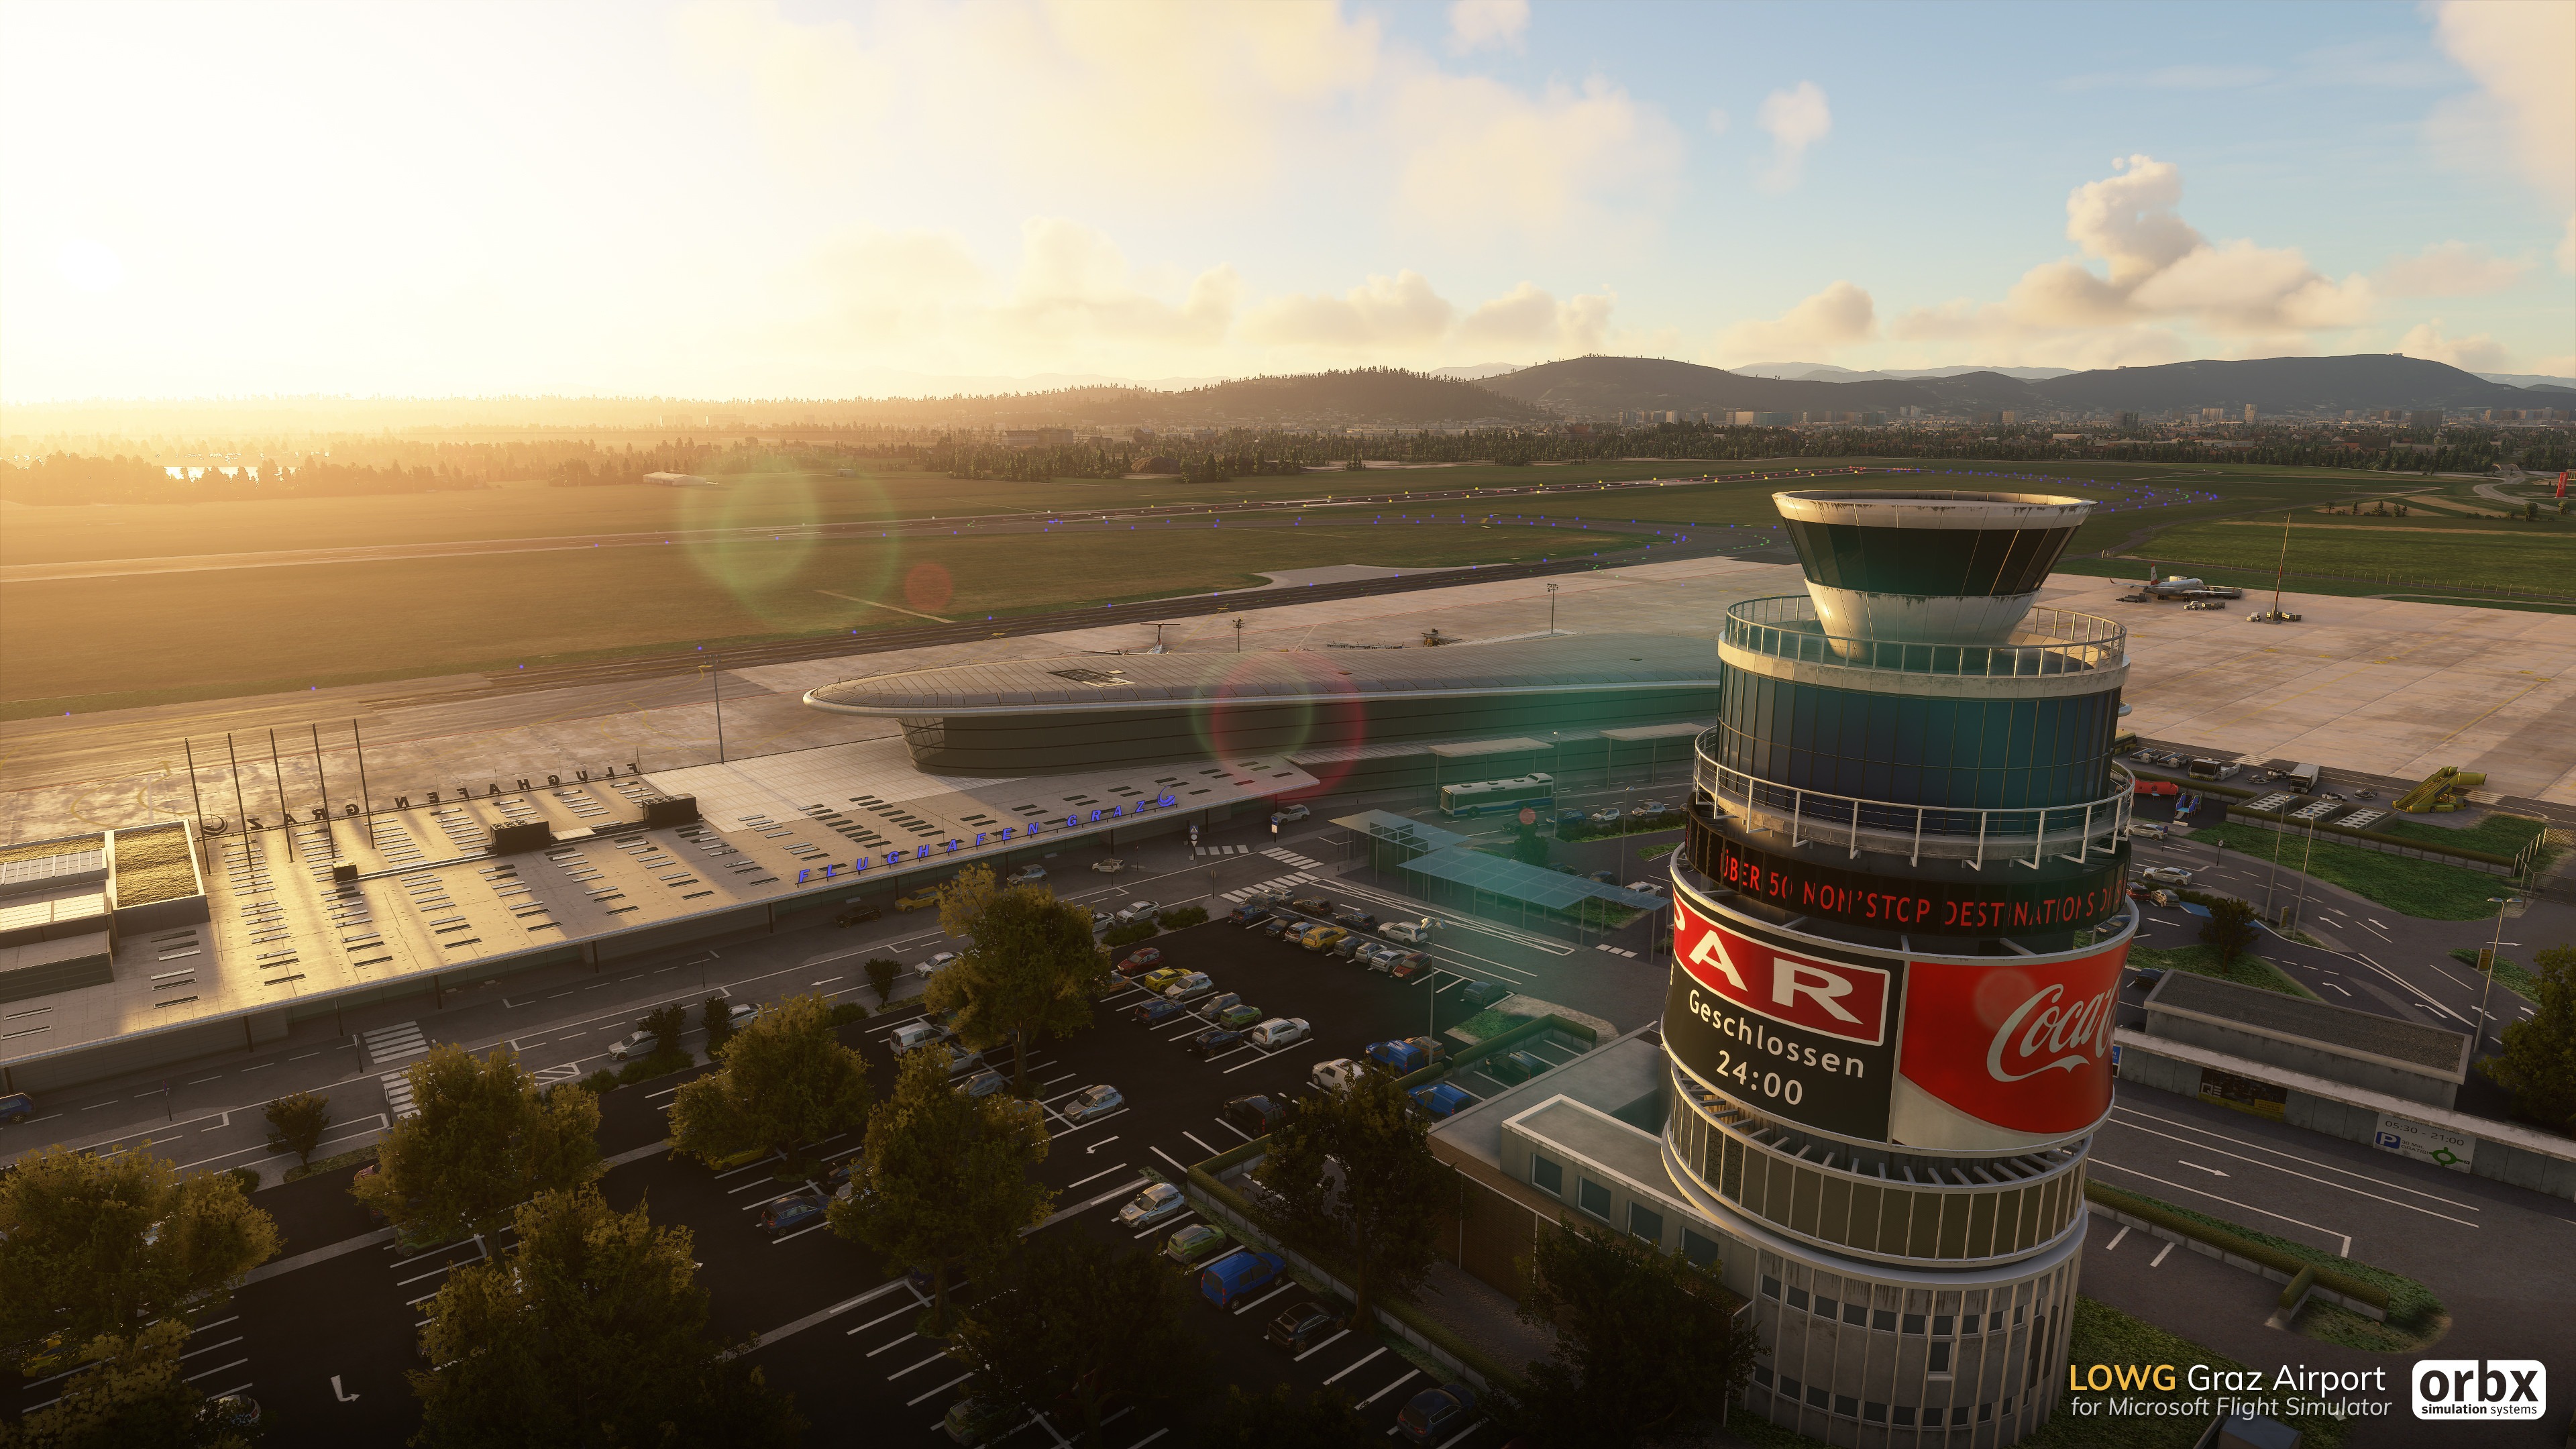 Orbx Announces Graz Airport for Microsoft Flight Simulator